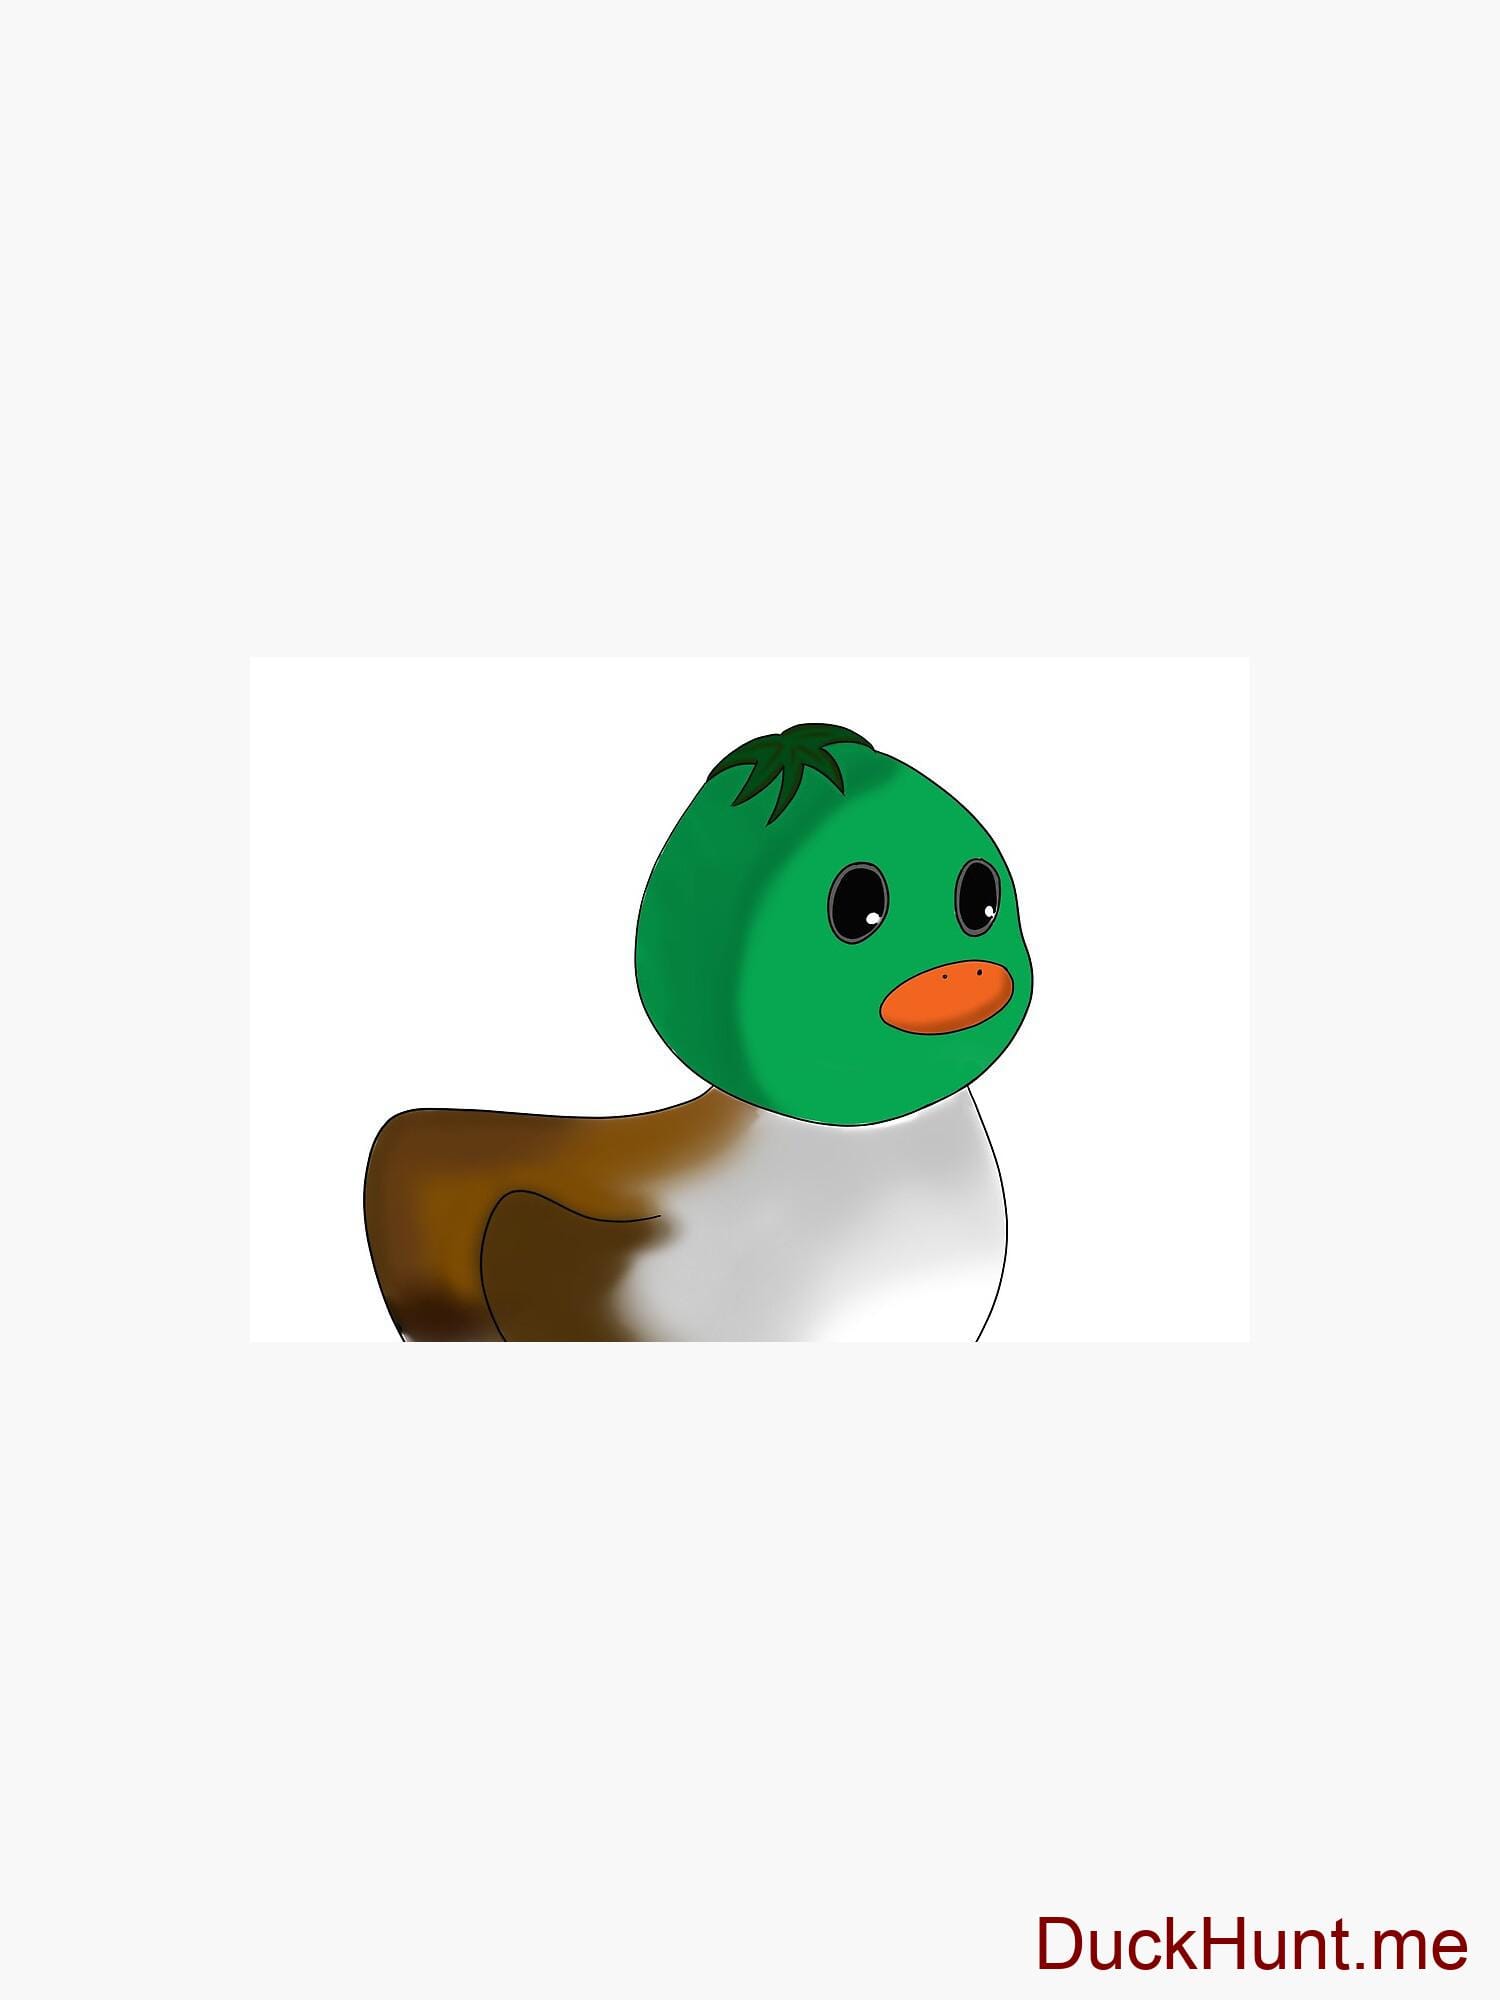 Normal Duck Mask alternative image 2